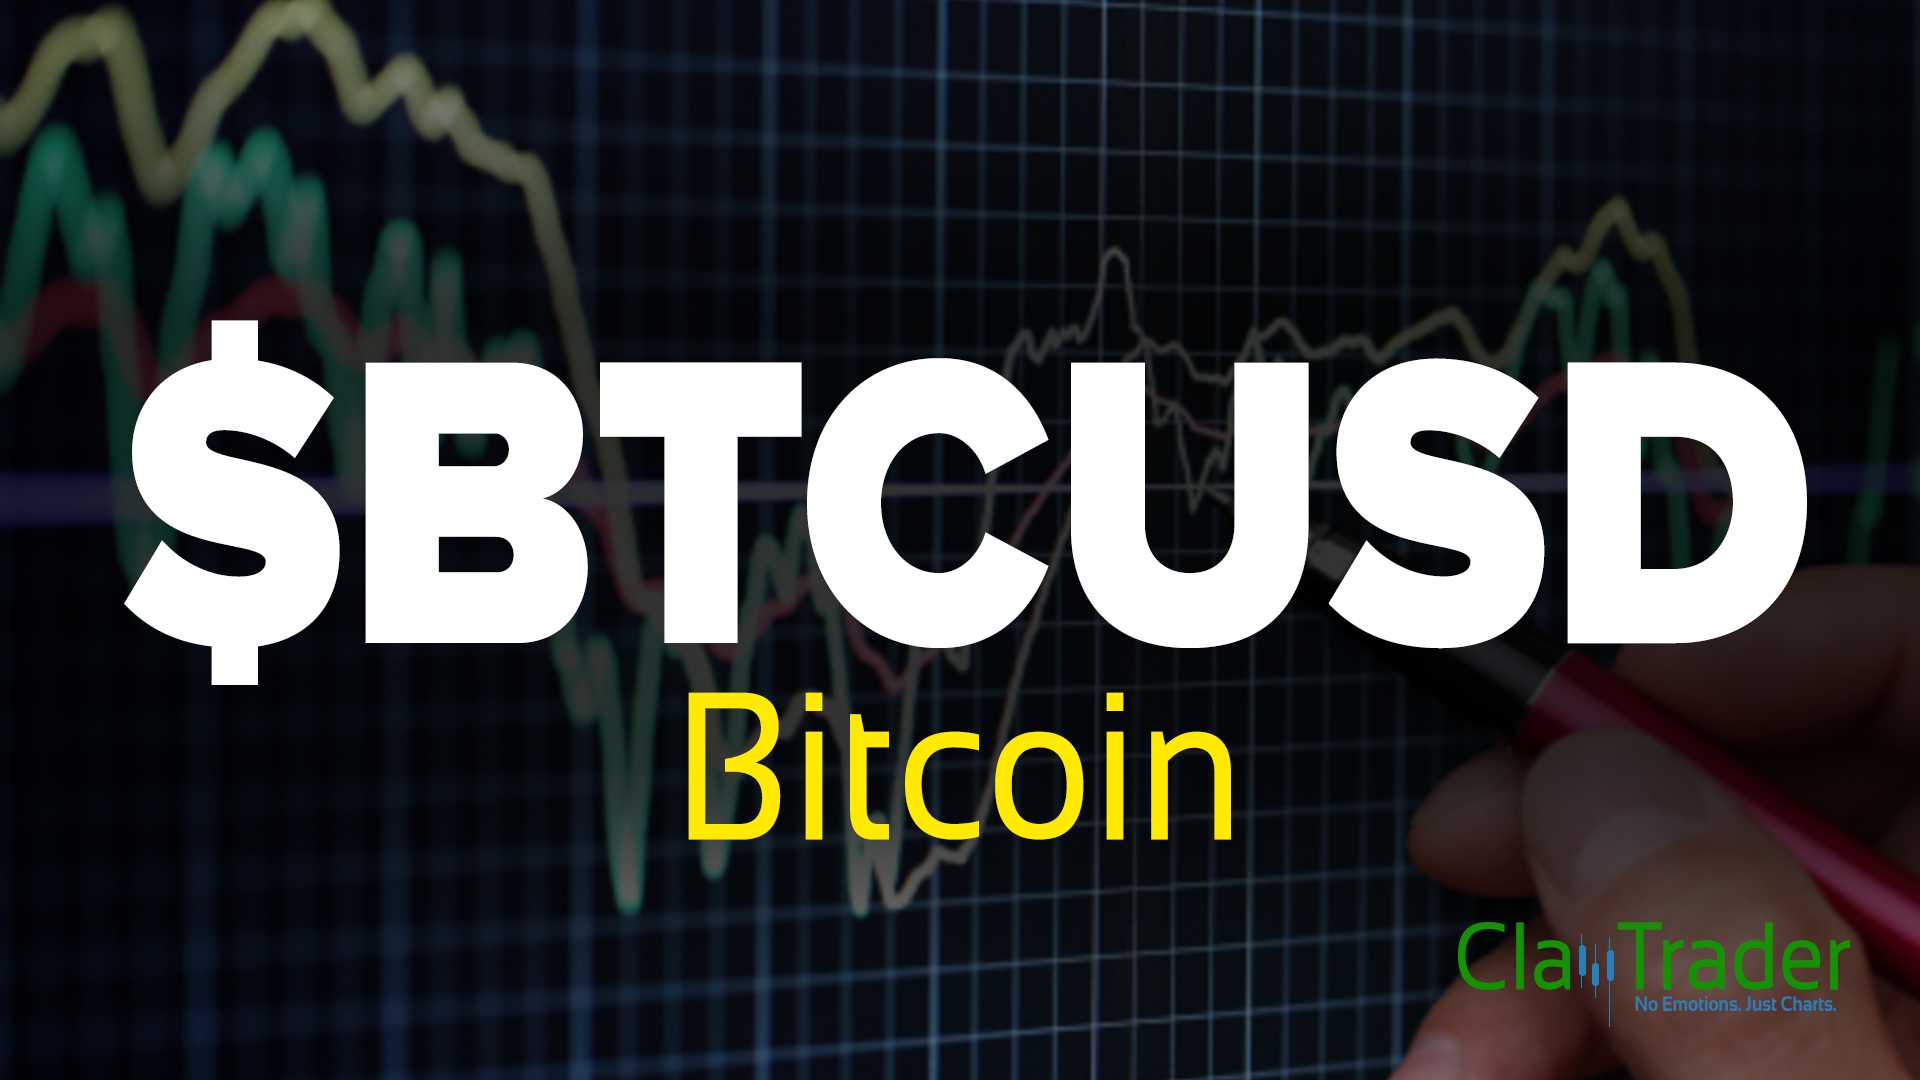 Bitcoin - $BTCUSD Trading Chart Technical Analysis